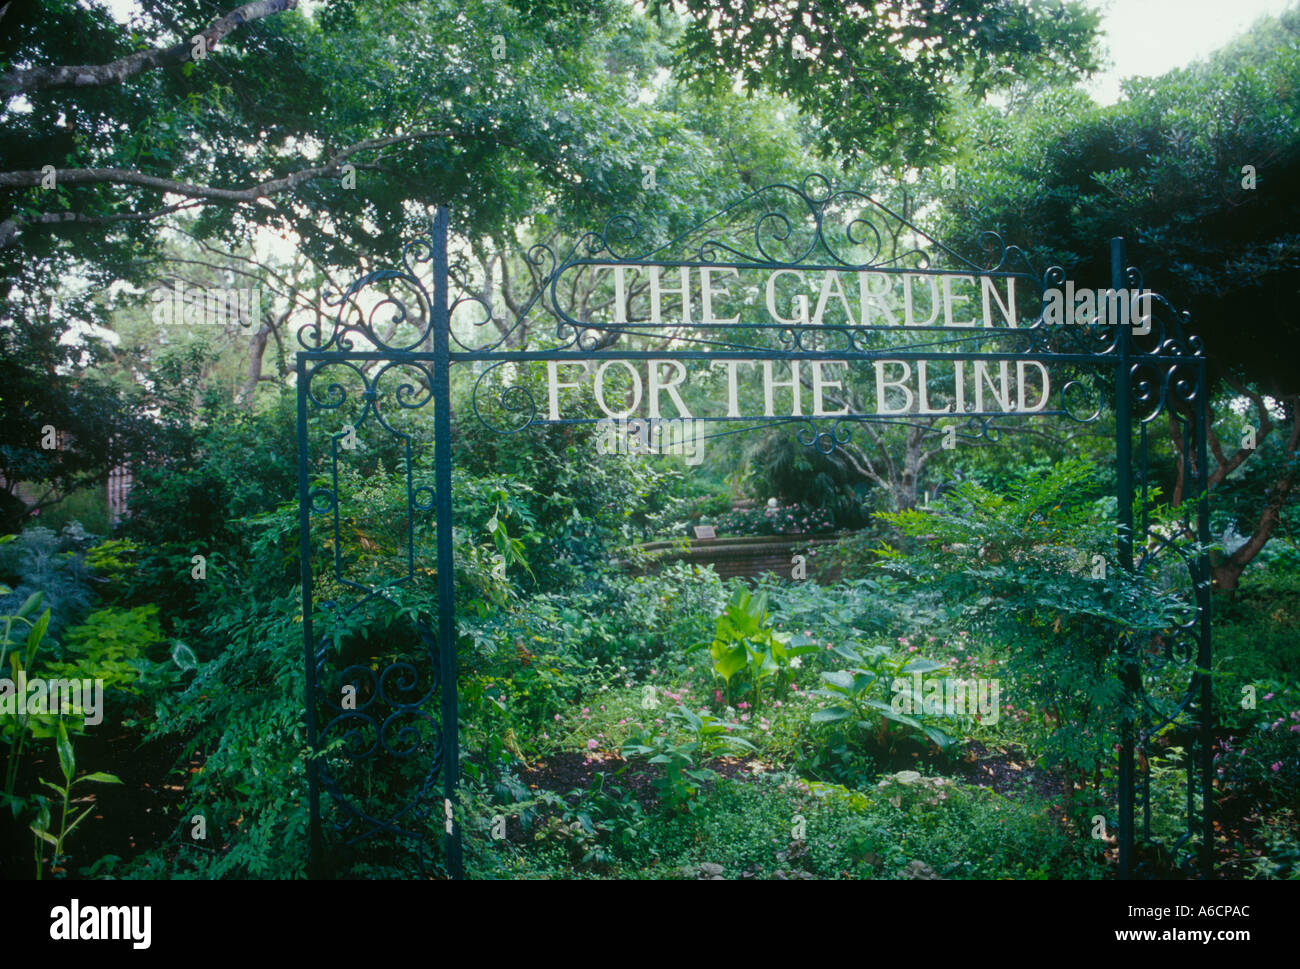 Botanical Gardens In San Antonio Texas Garden For The Blind This